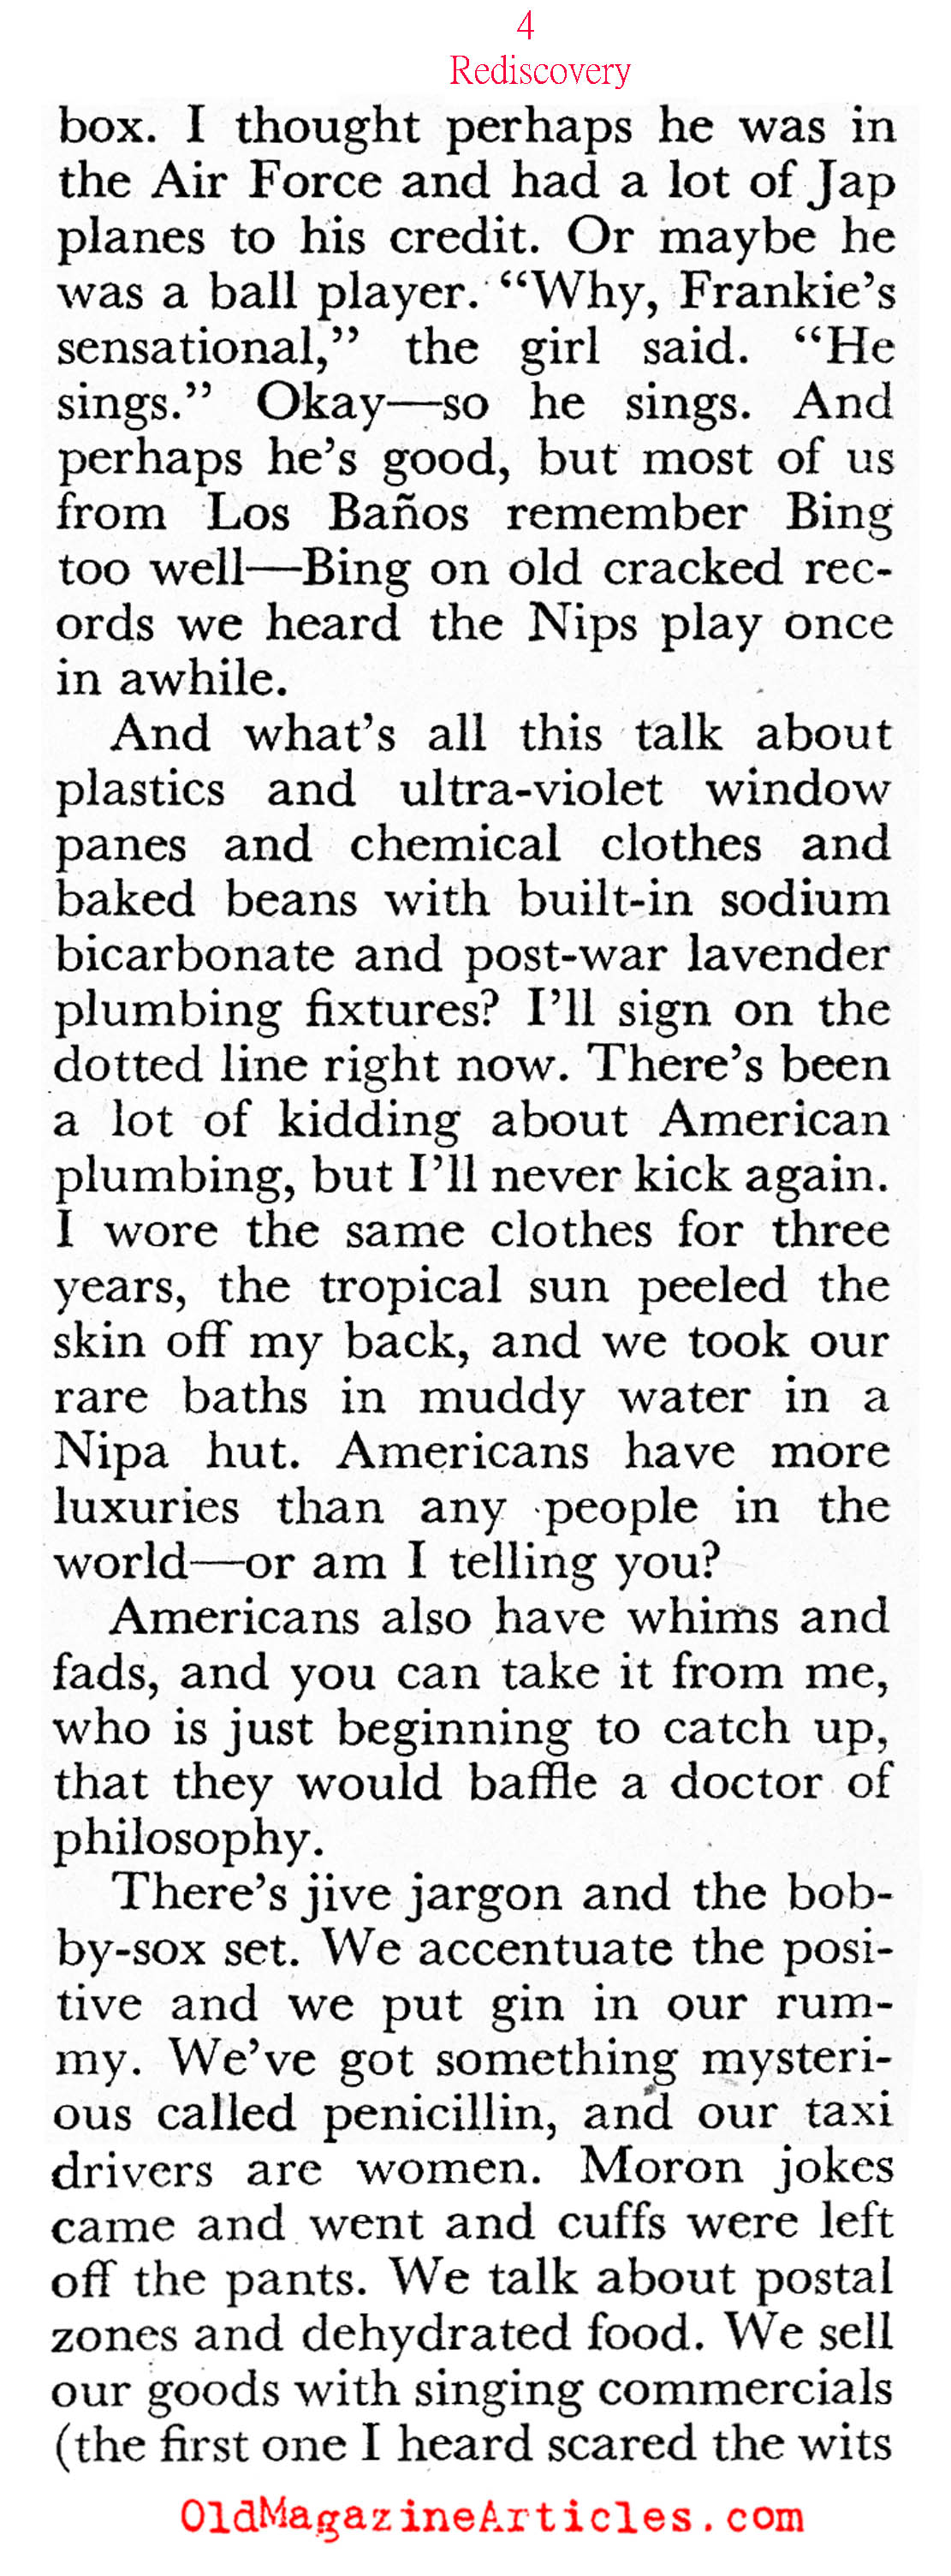 The Returned P.O.W. (Coronet Magazine, 1945)